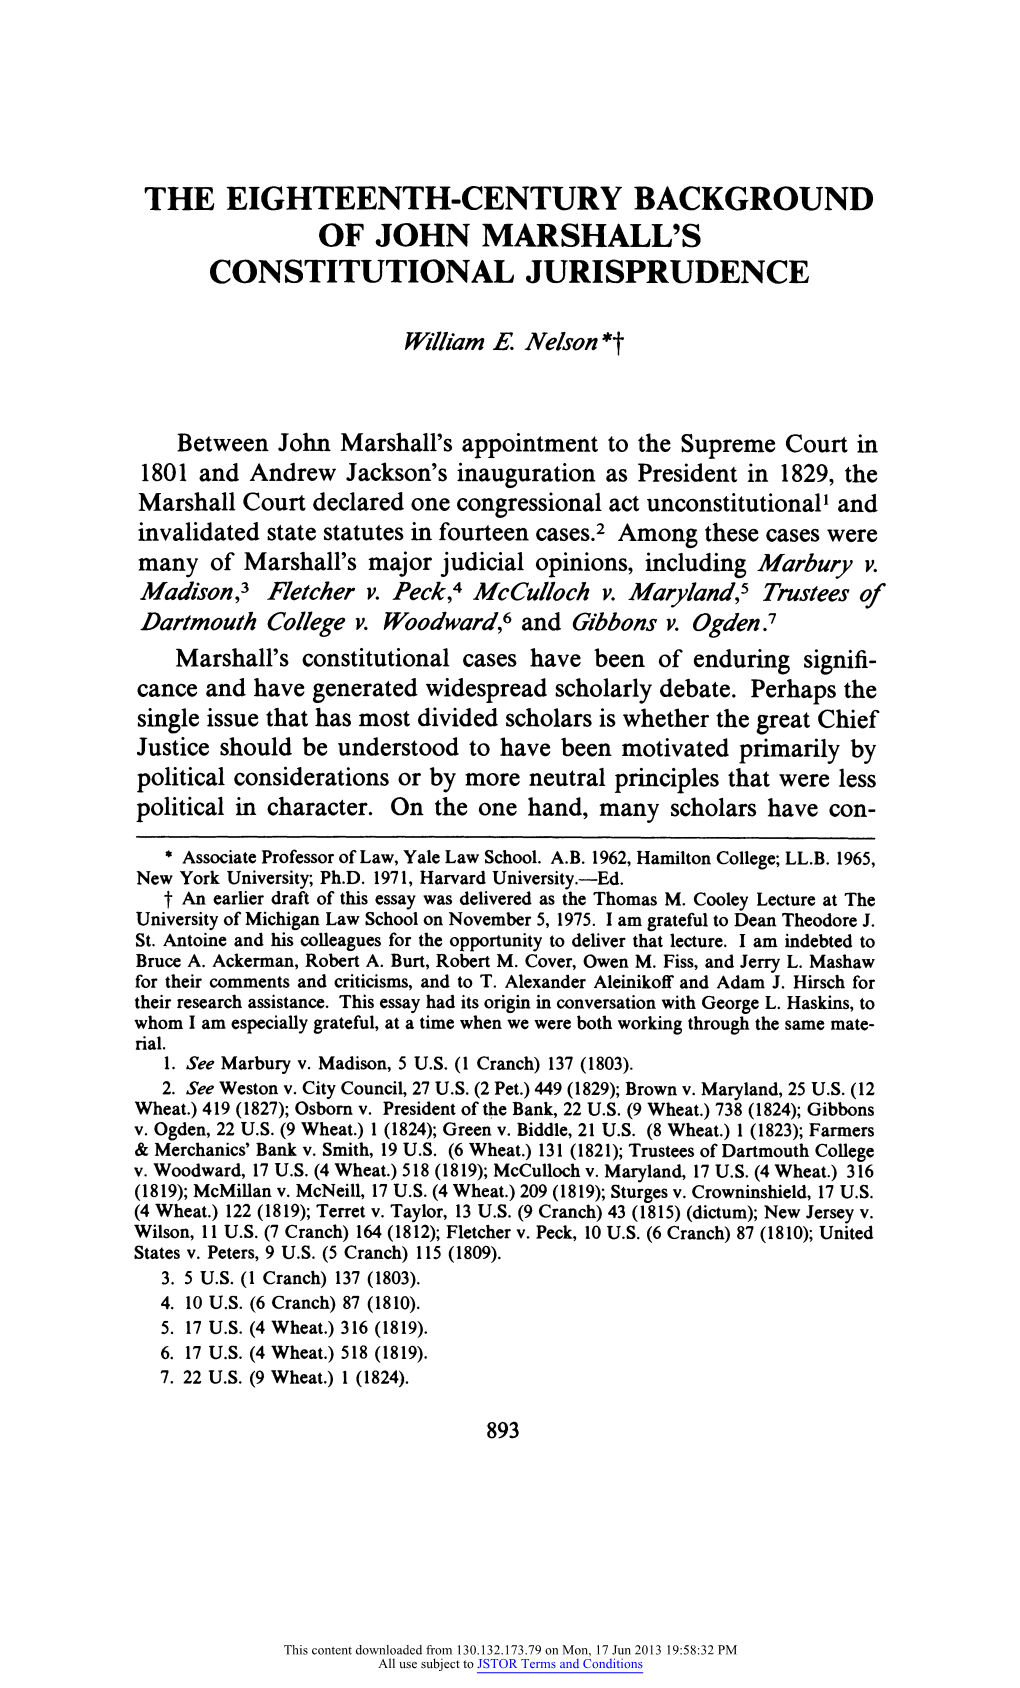 The Eighteenth-Century Background of John Marshall's Constitutional